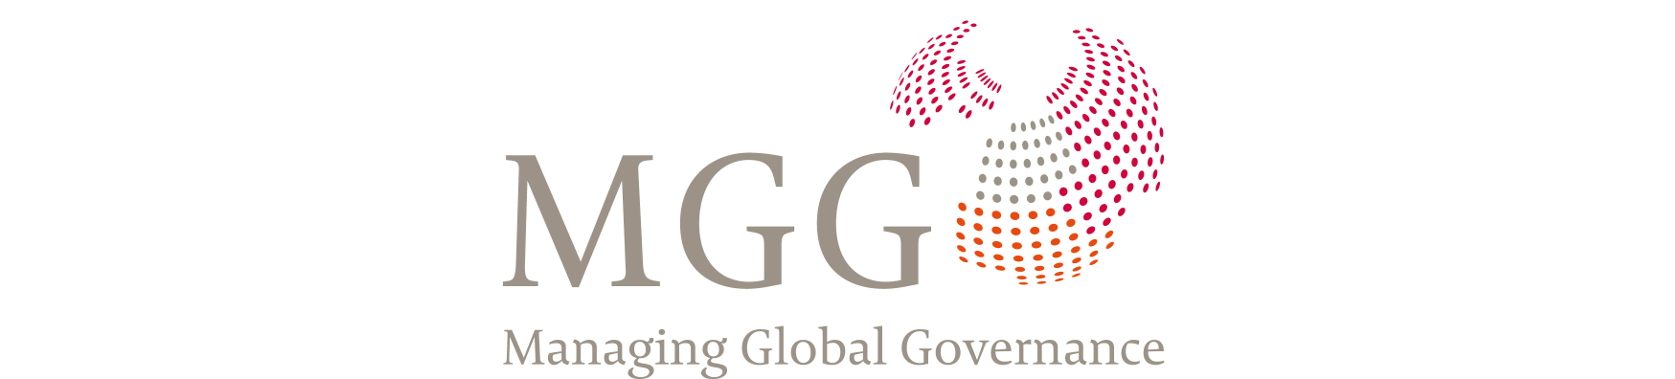 mgg_logo_header